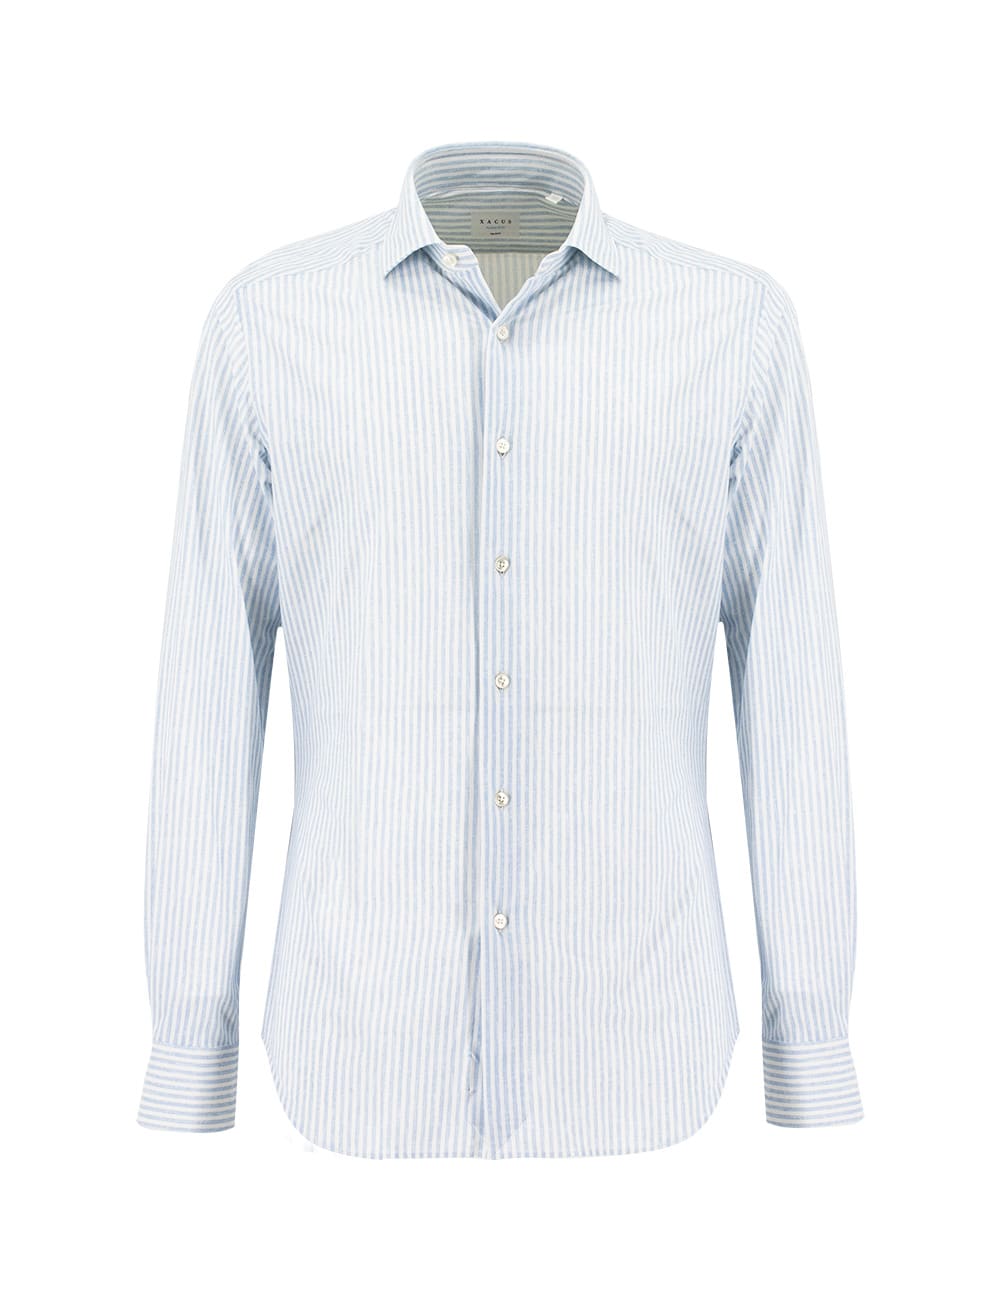 Xacus Shirt In Stripe Light Blue+white